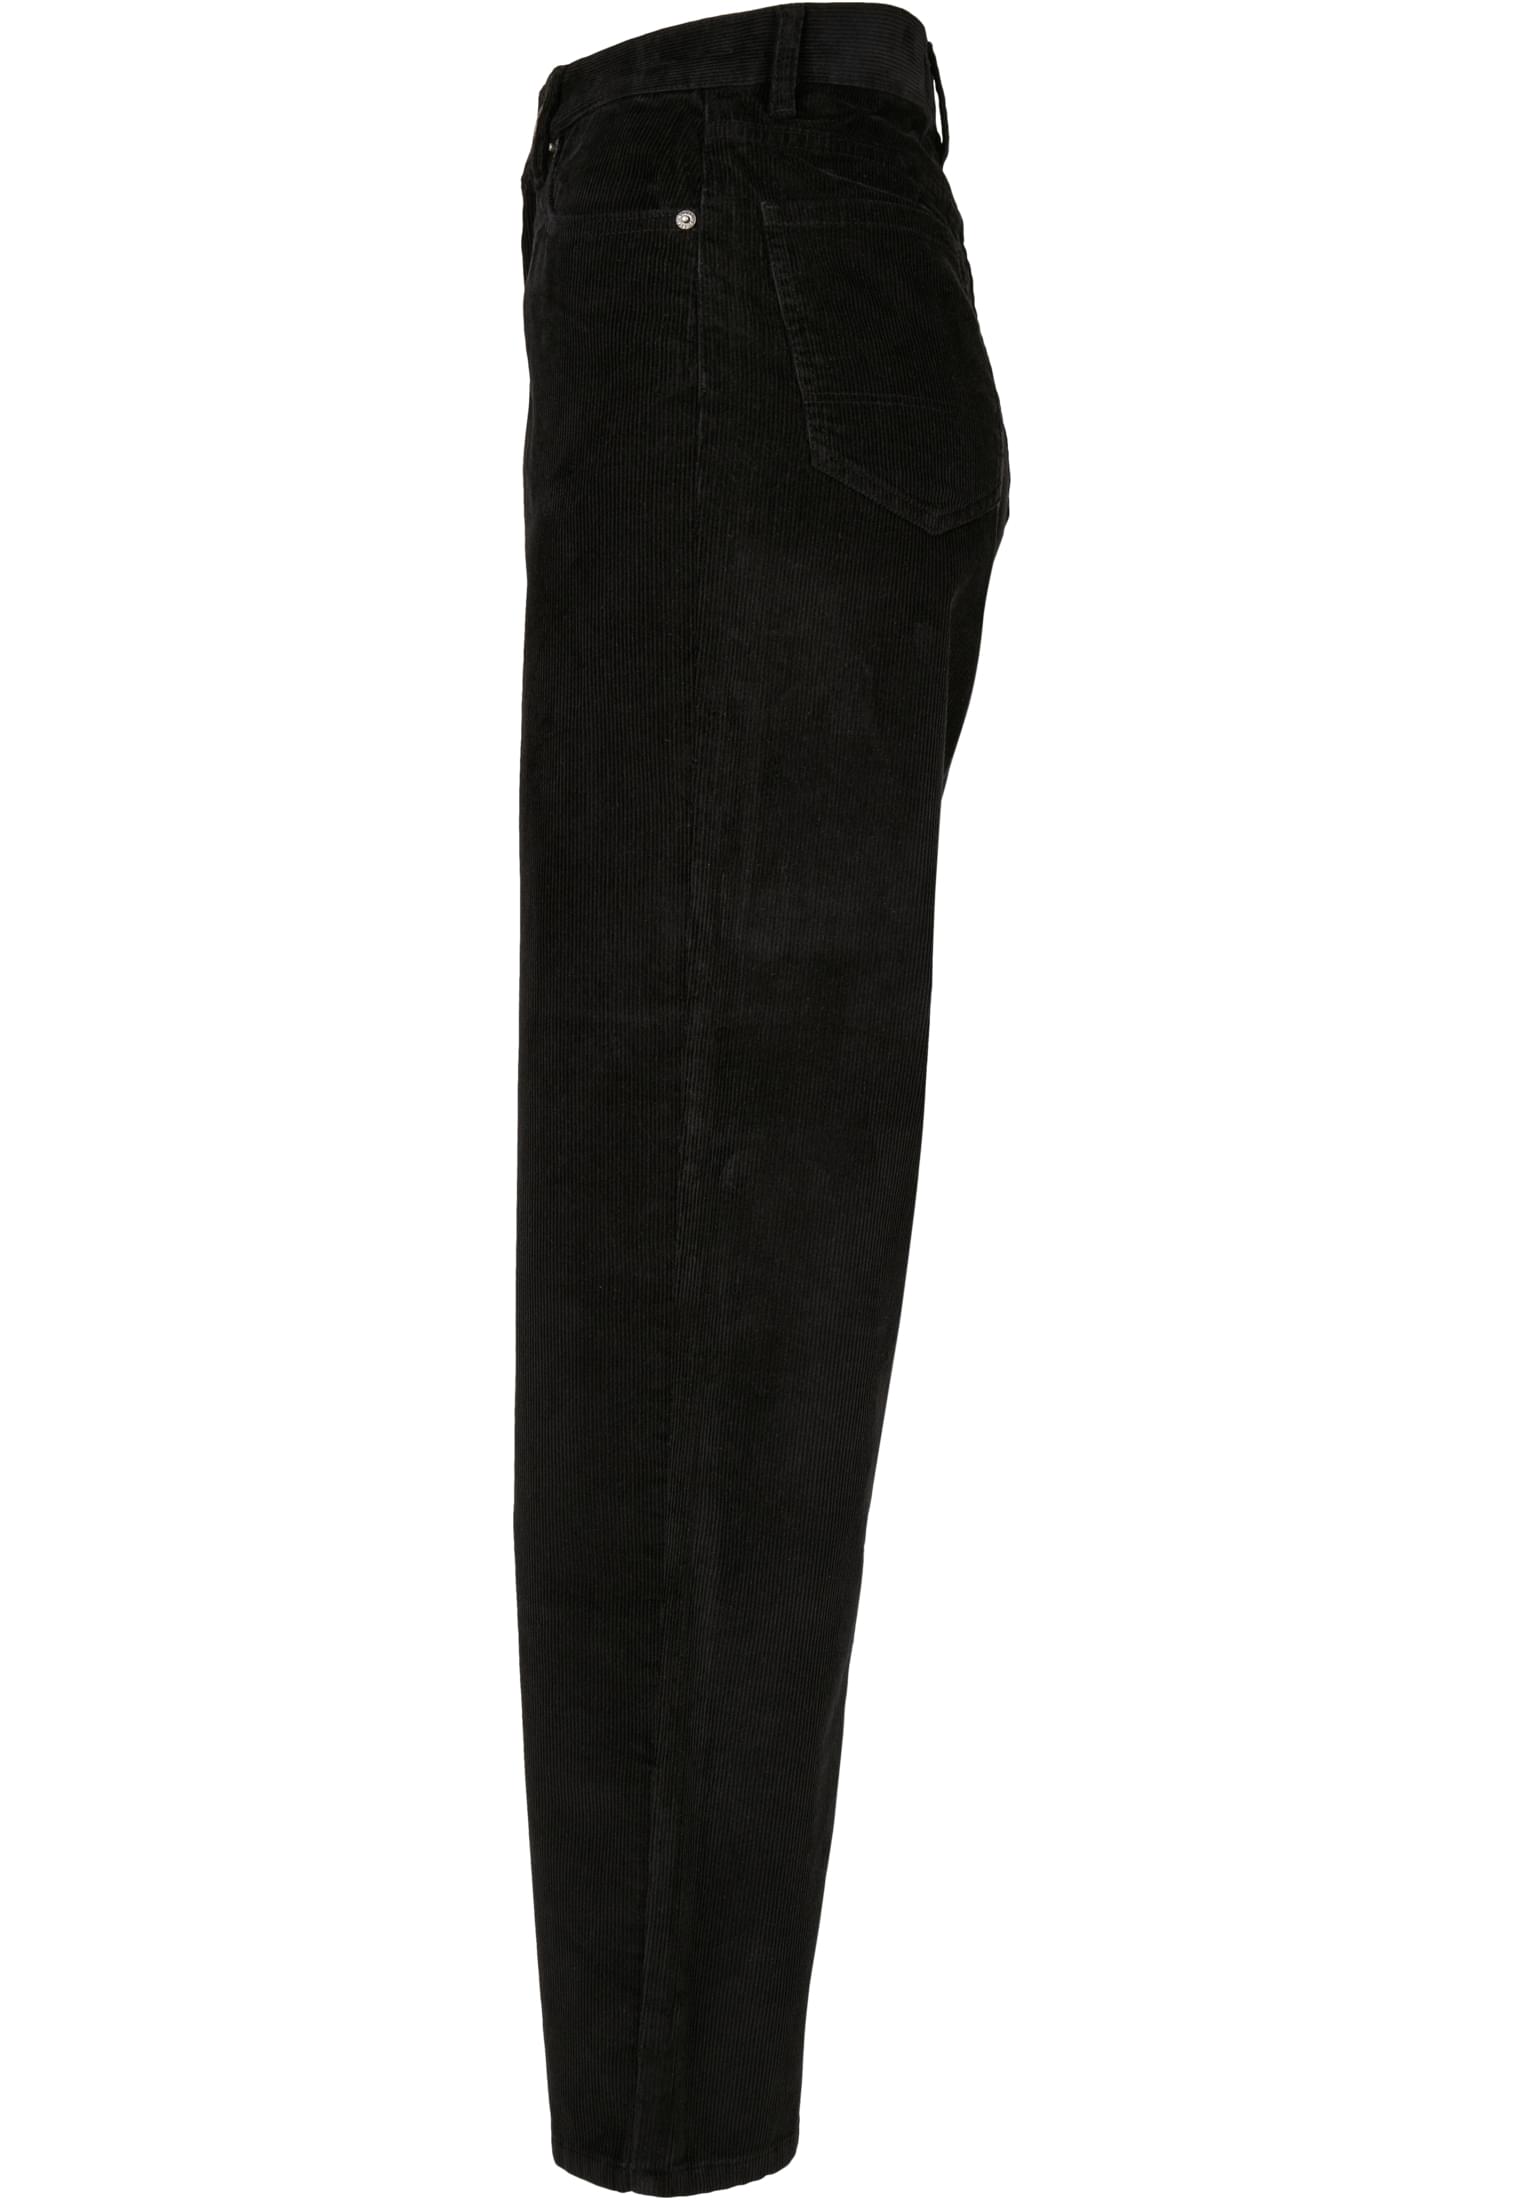 Dewadbow Women High Waist Corduroy Pants Vintage Straight Baggy Trousers 